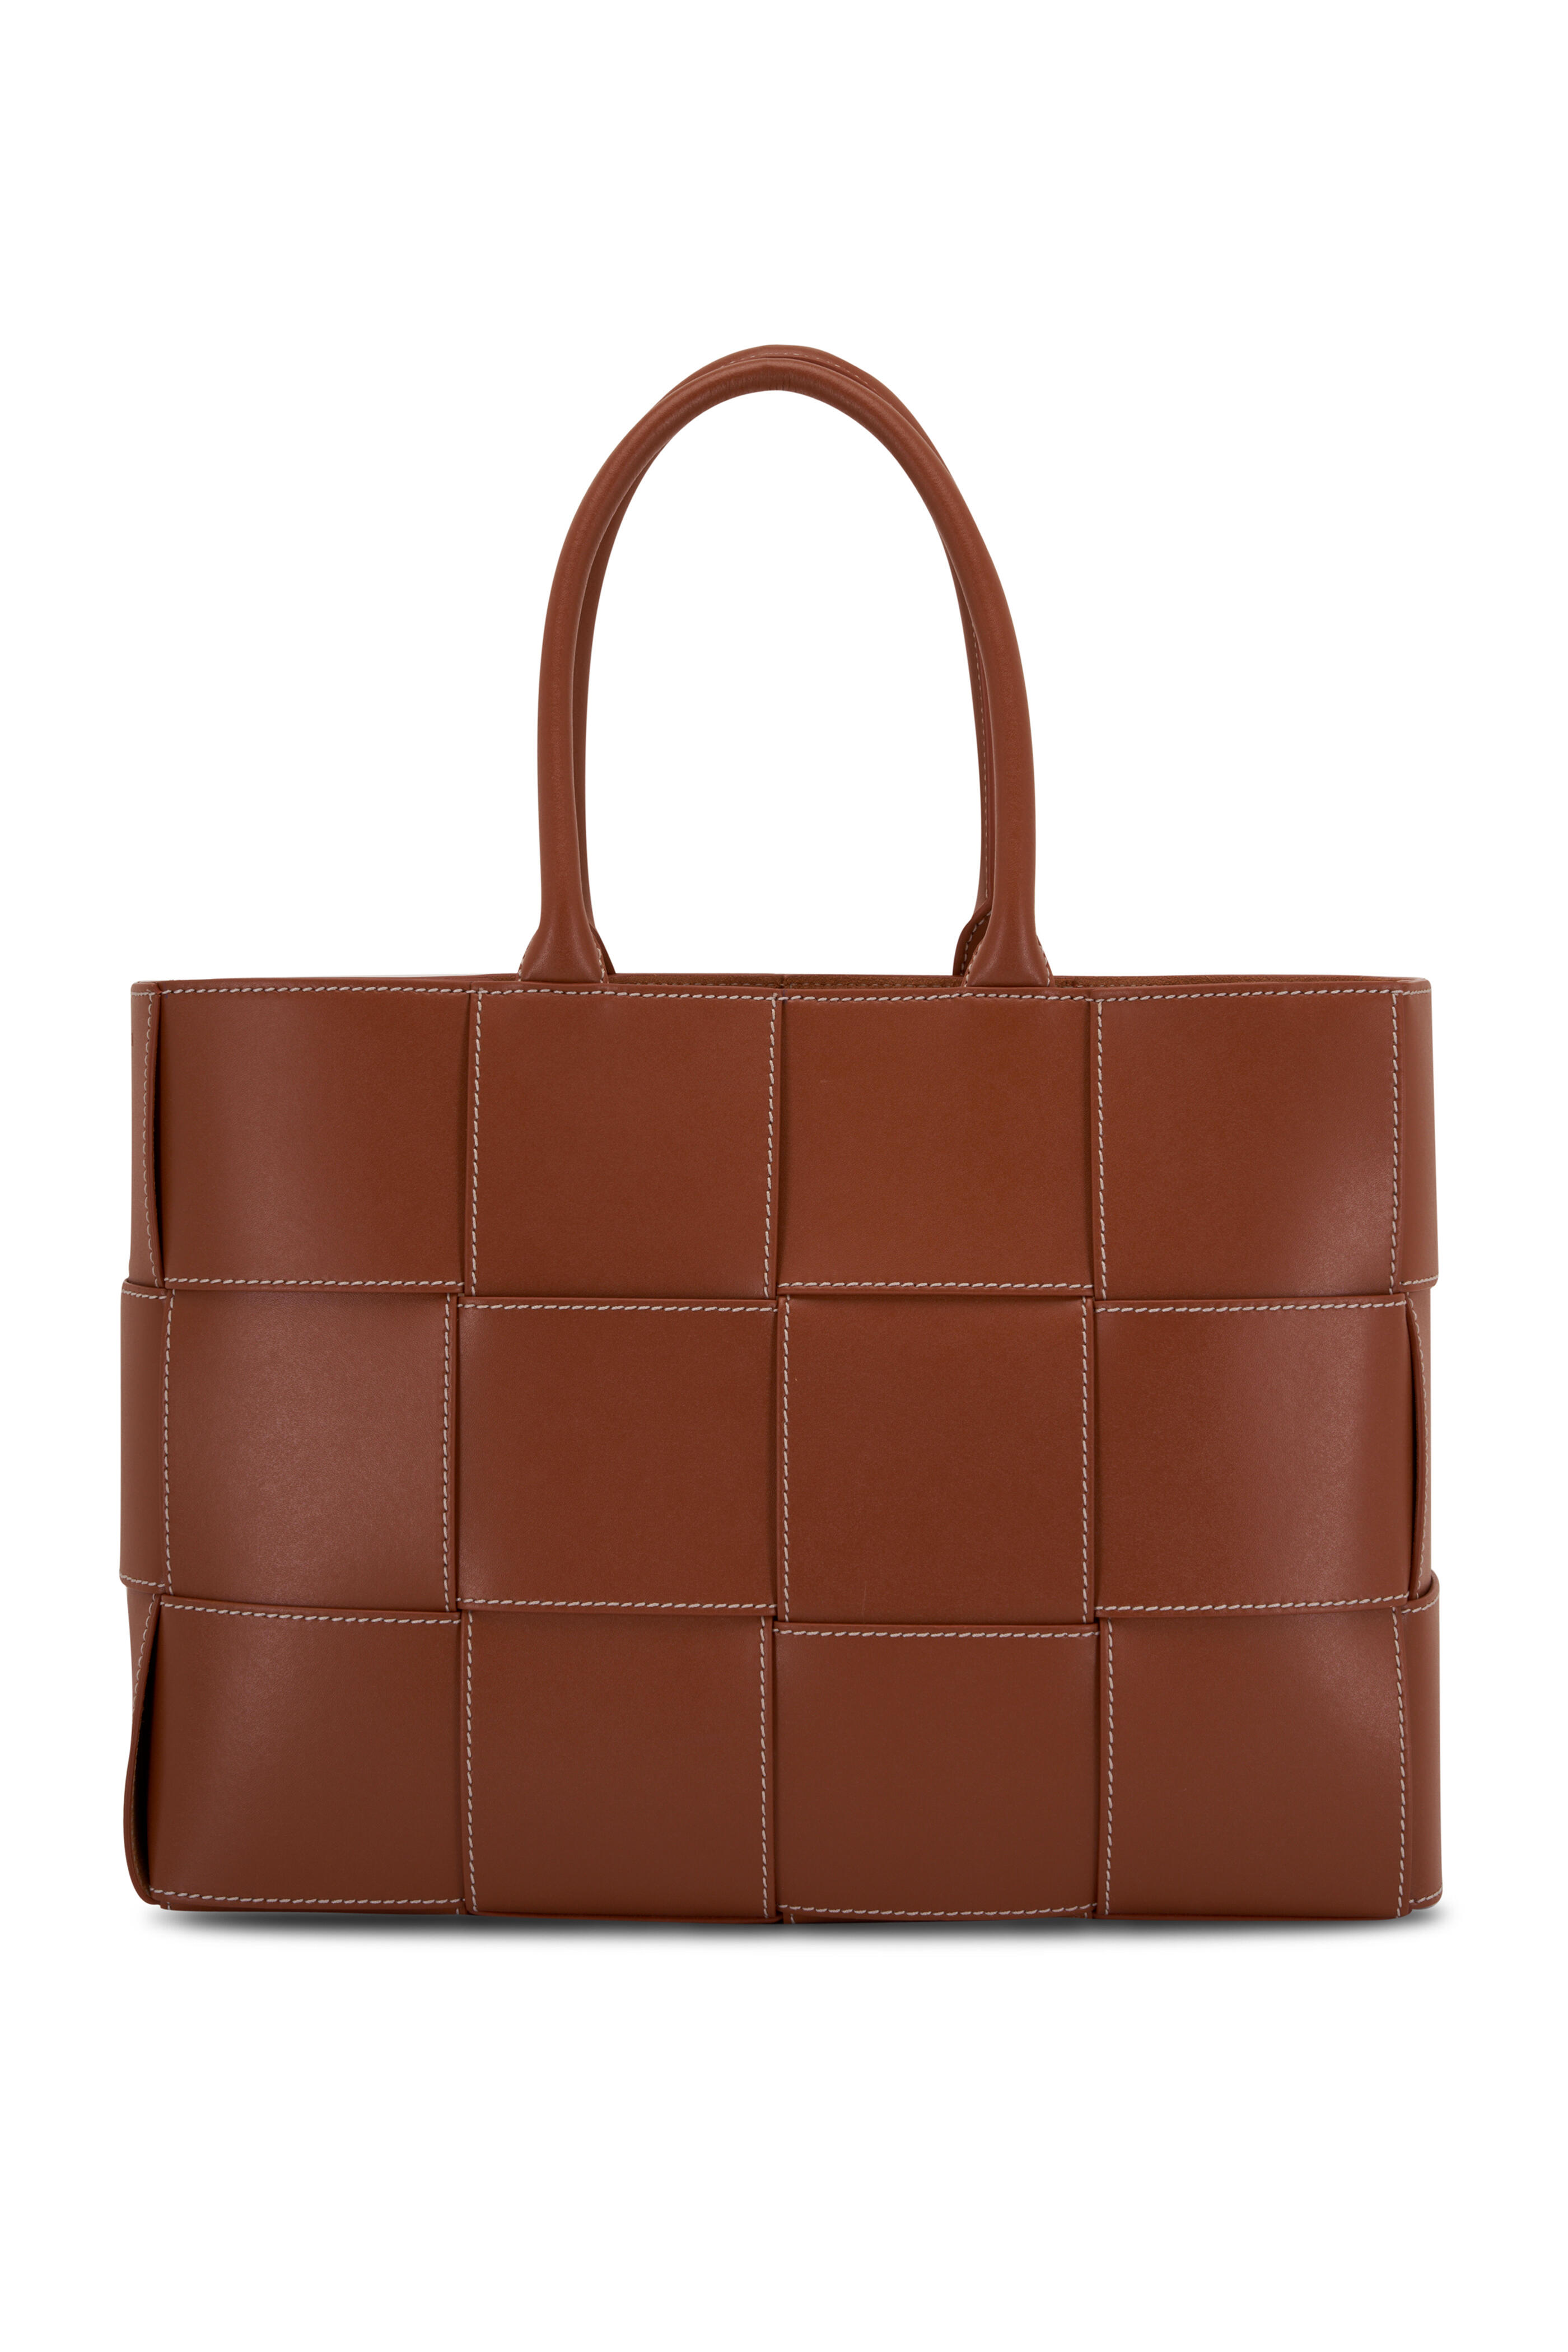 Bottega Veneta Pre-owned Leather Handbag